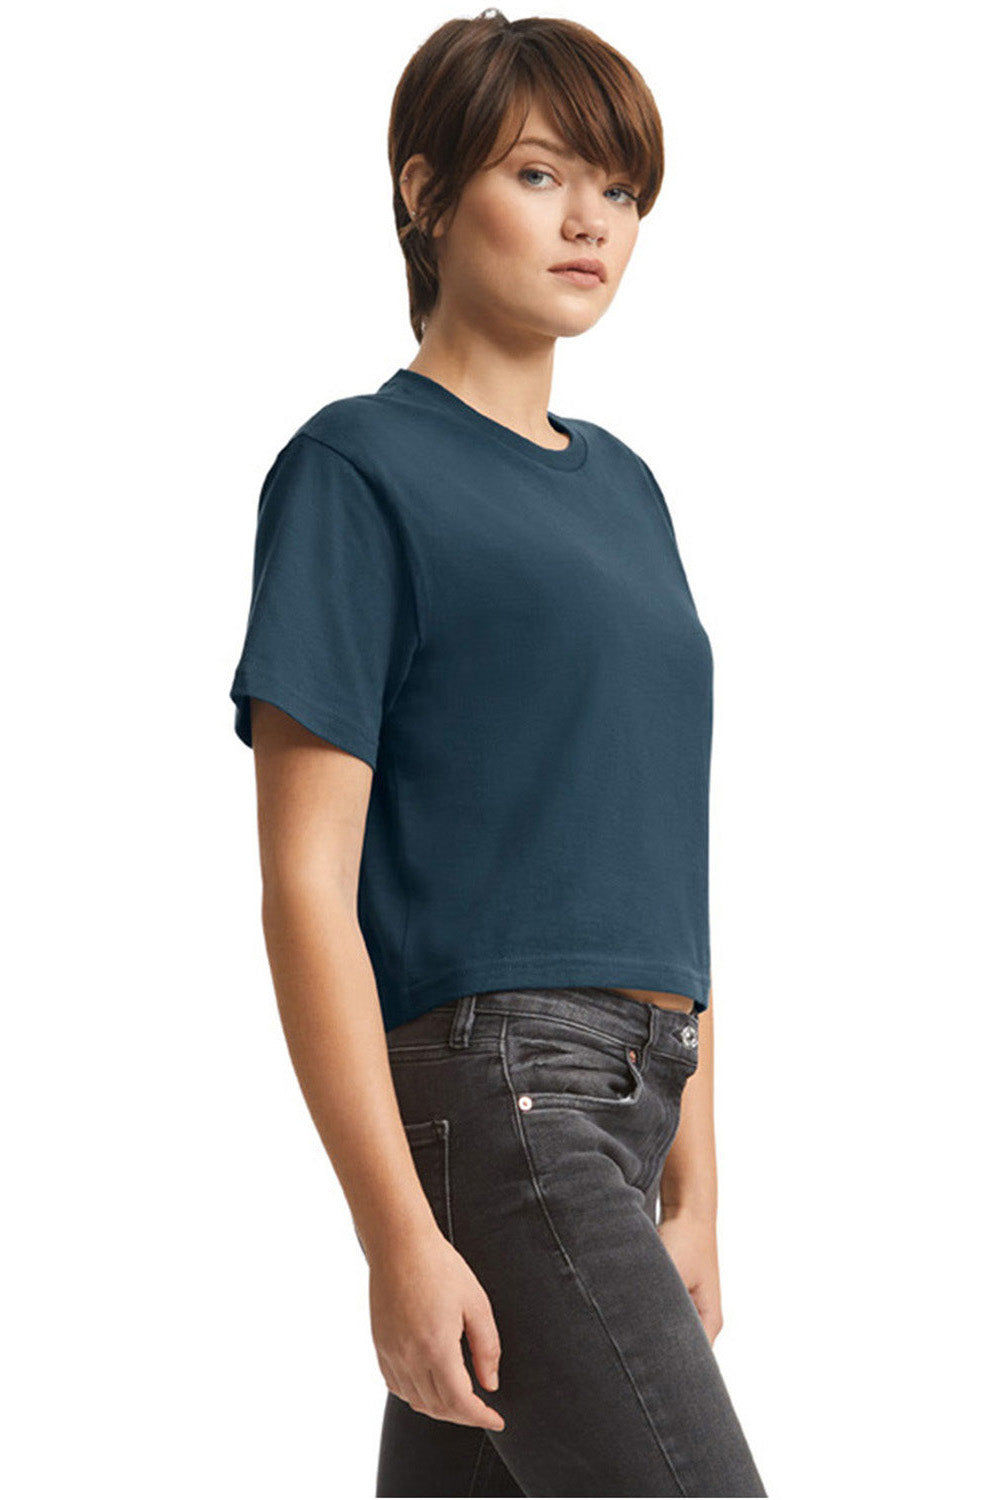 American Apparel 102AM Womens Fine Jersey Boxy Short Sleeve Crewneck T-Shirt Sea Blue Model Side